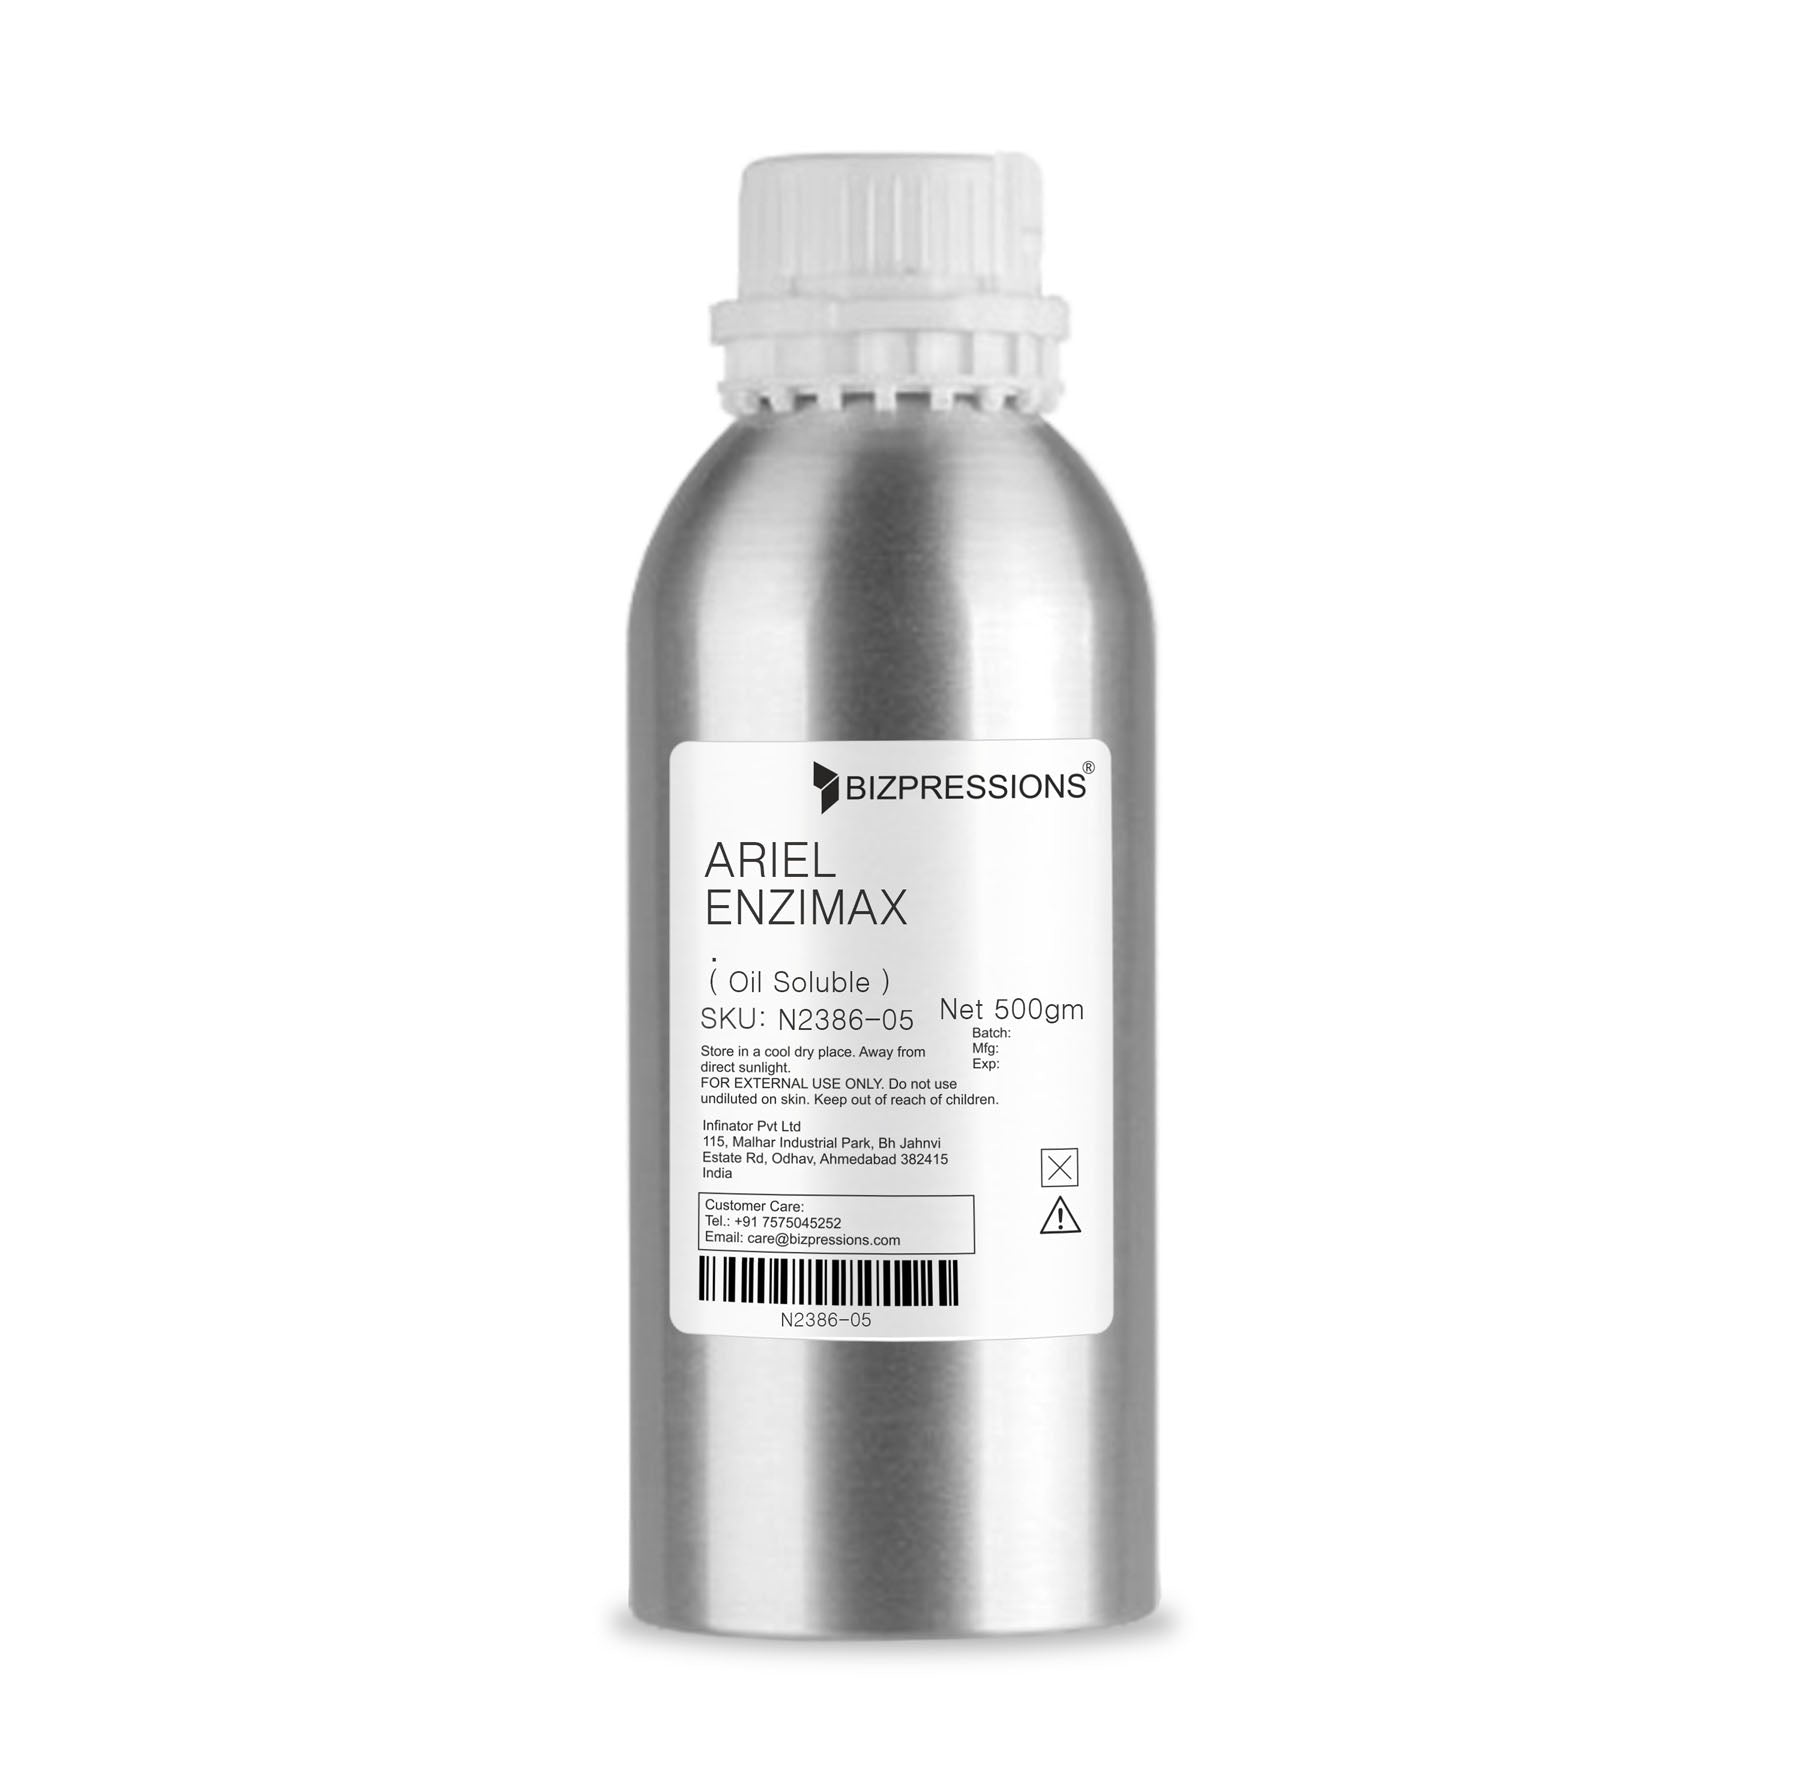 ARIEL ENZIMAX - Fragrance ( Oil Soluble ) - 500 gm